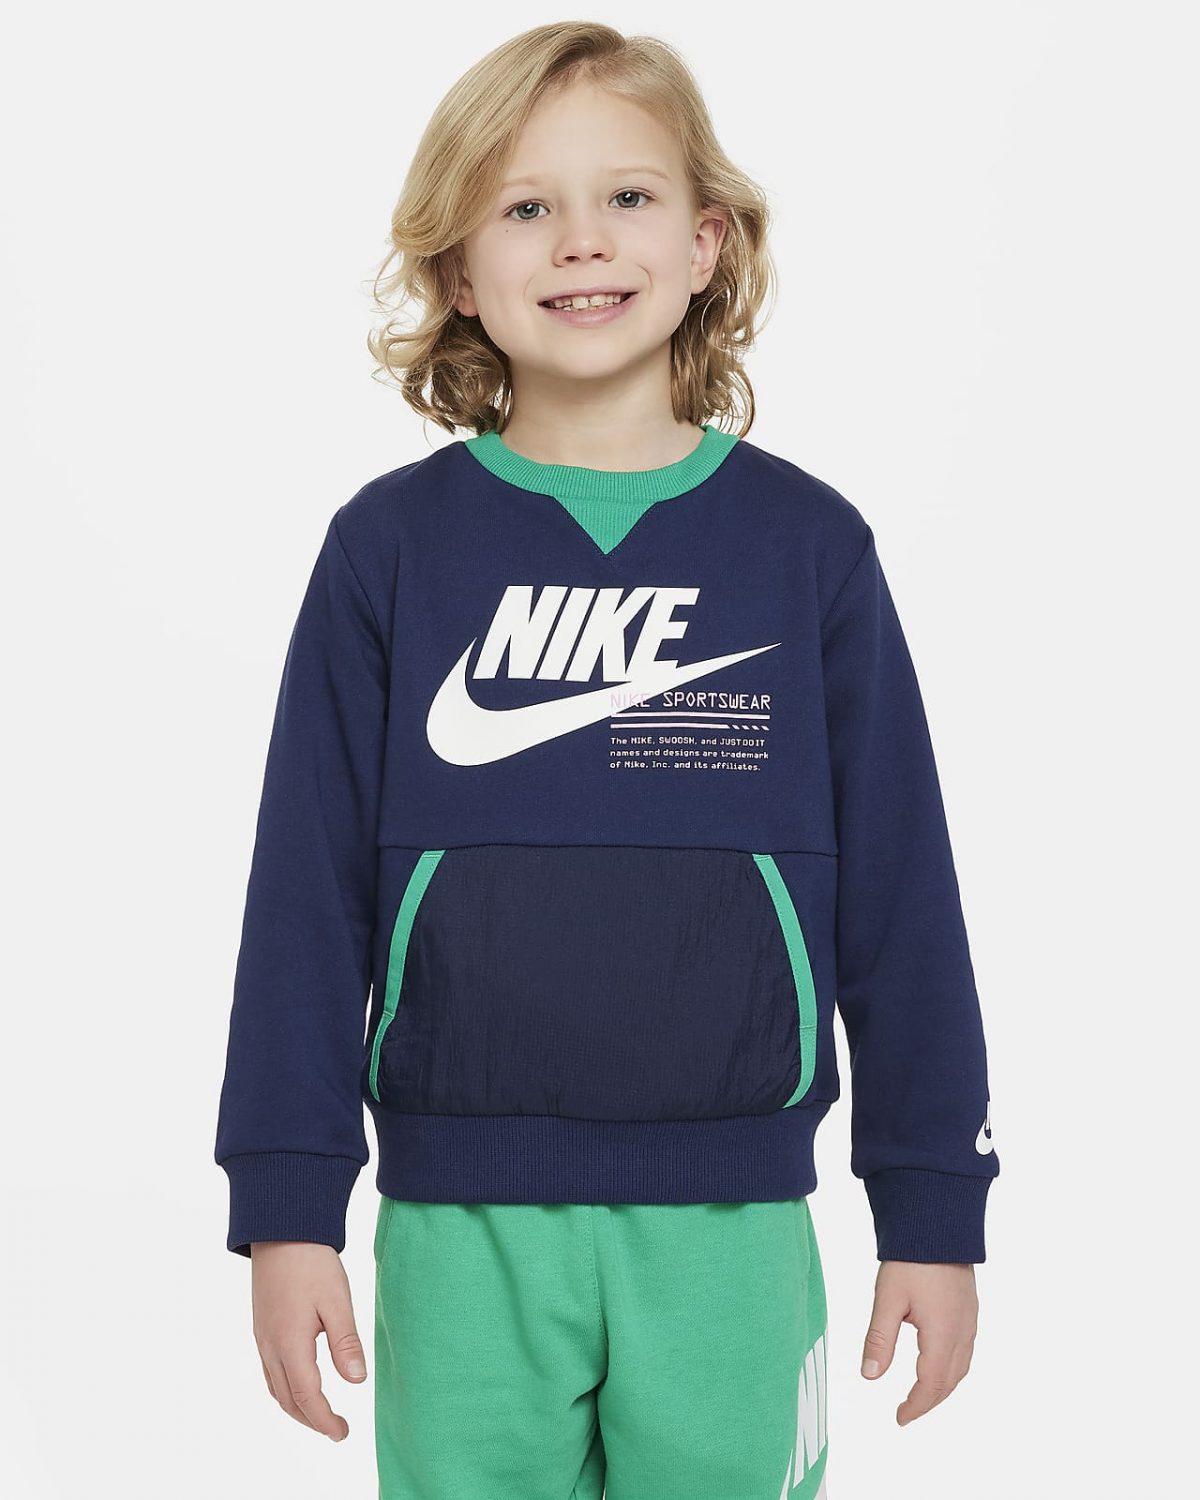 Детский топ Nike Sportswear Paint Your Future фото